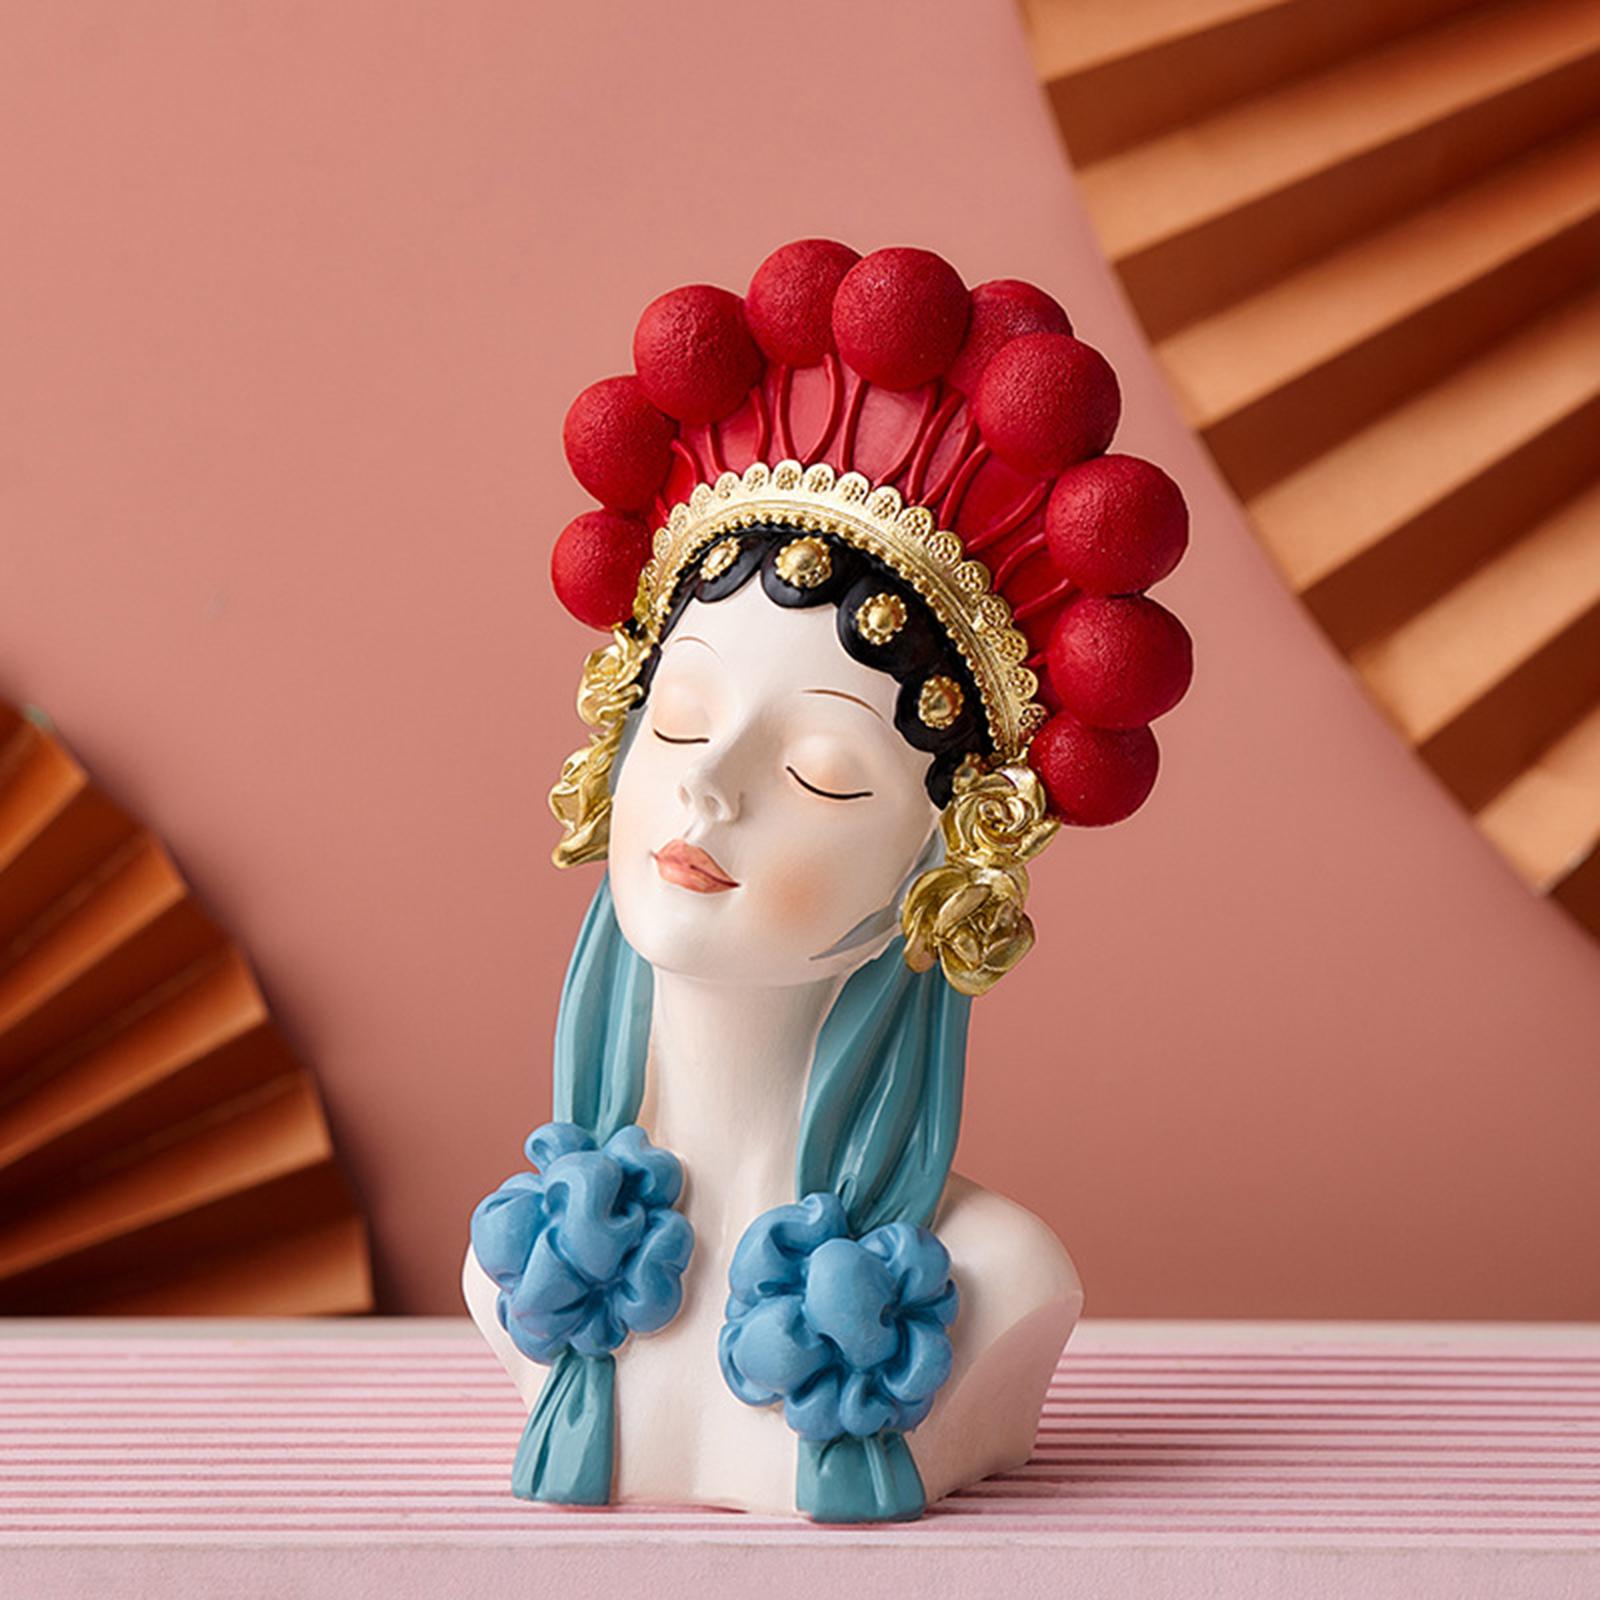 Peking Opera Doll Statue Sculpture Figurine for Living Room Desktop Home